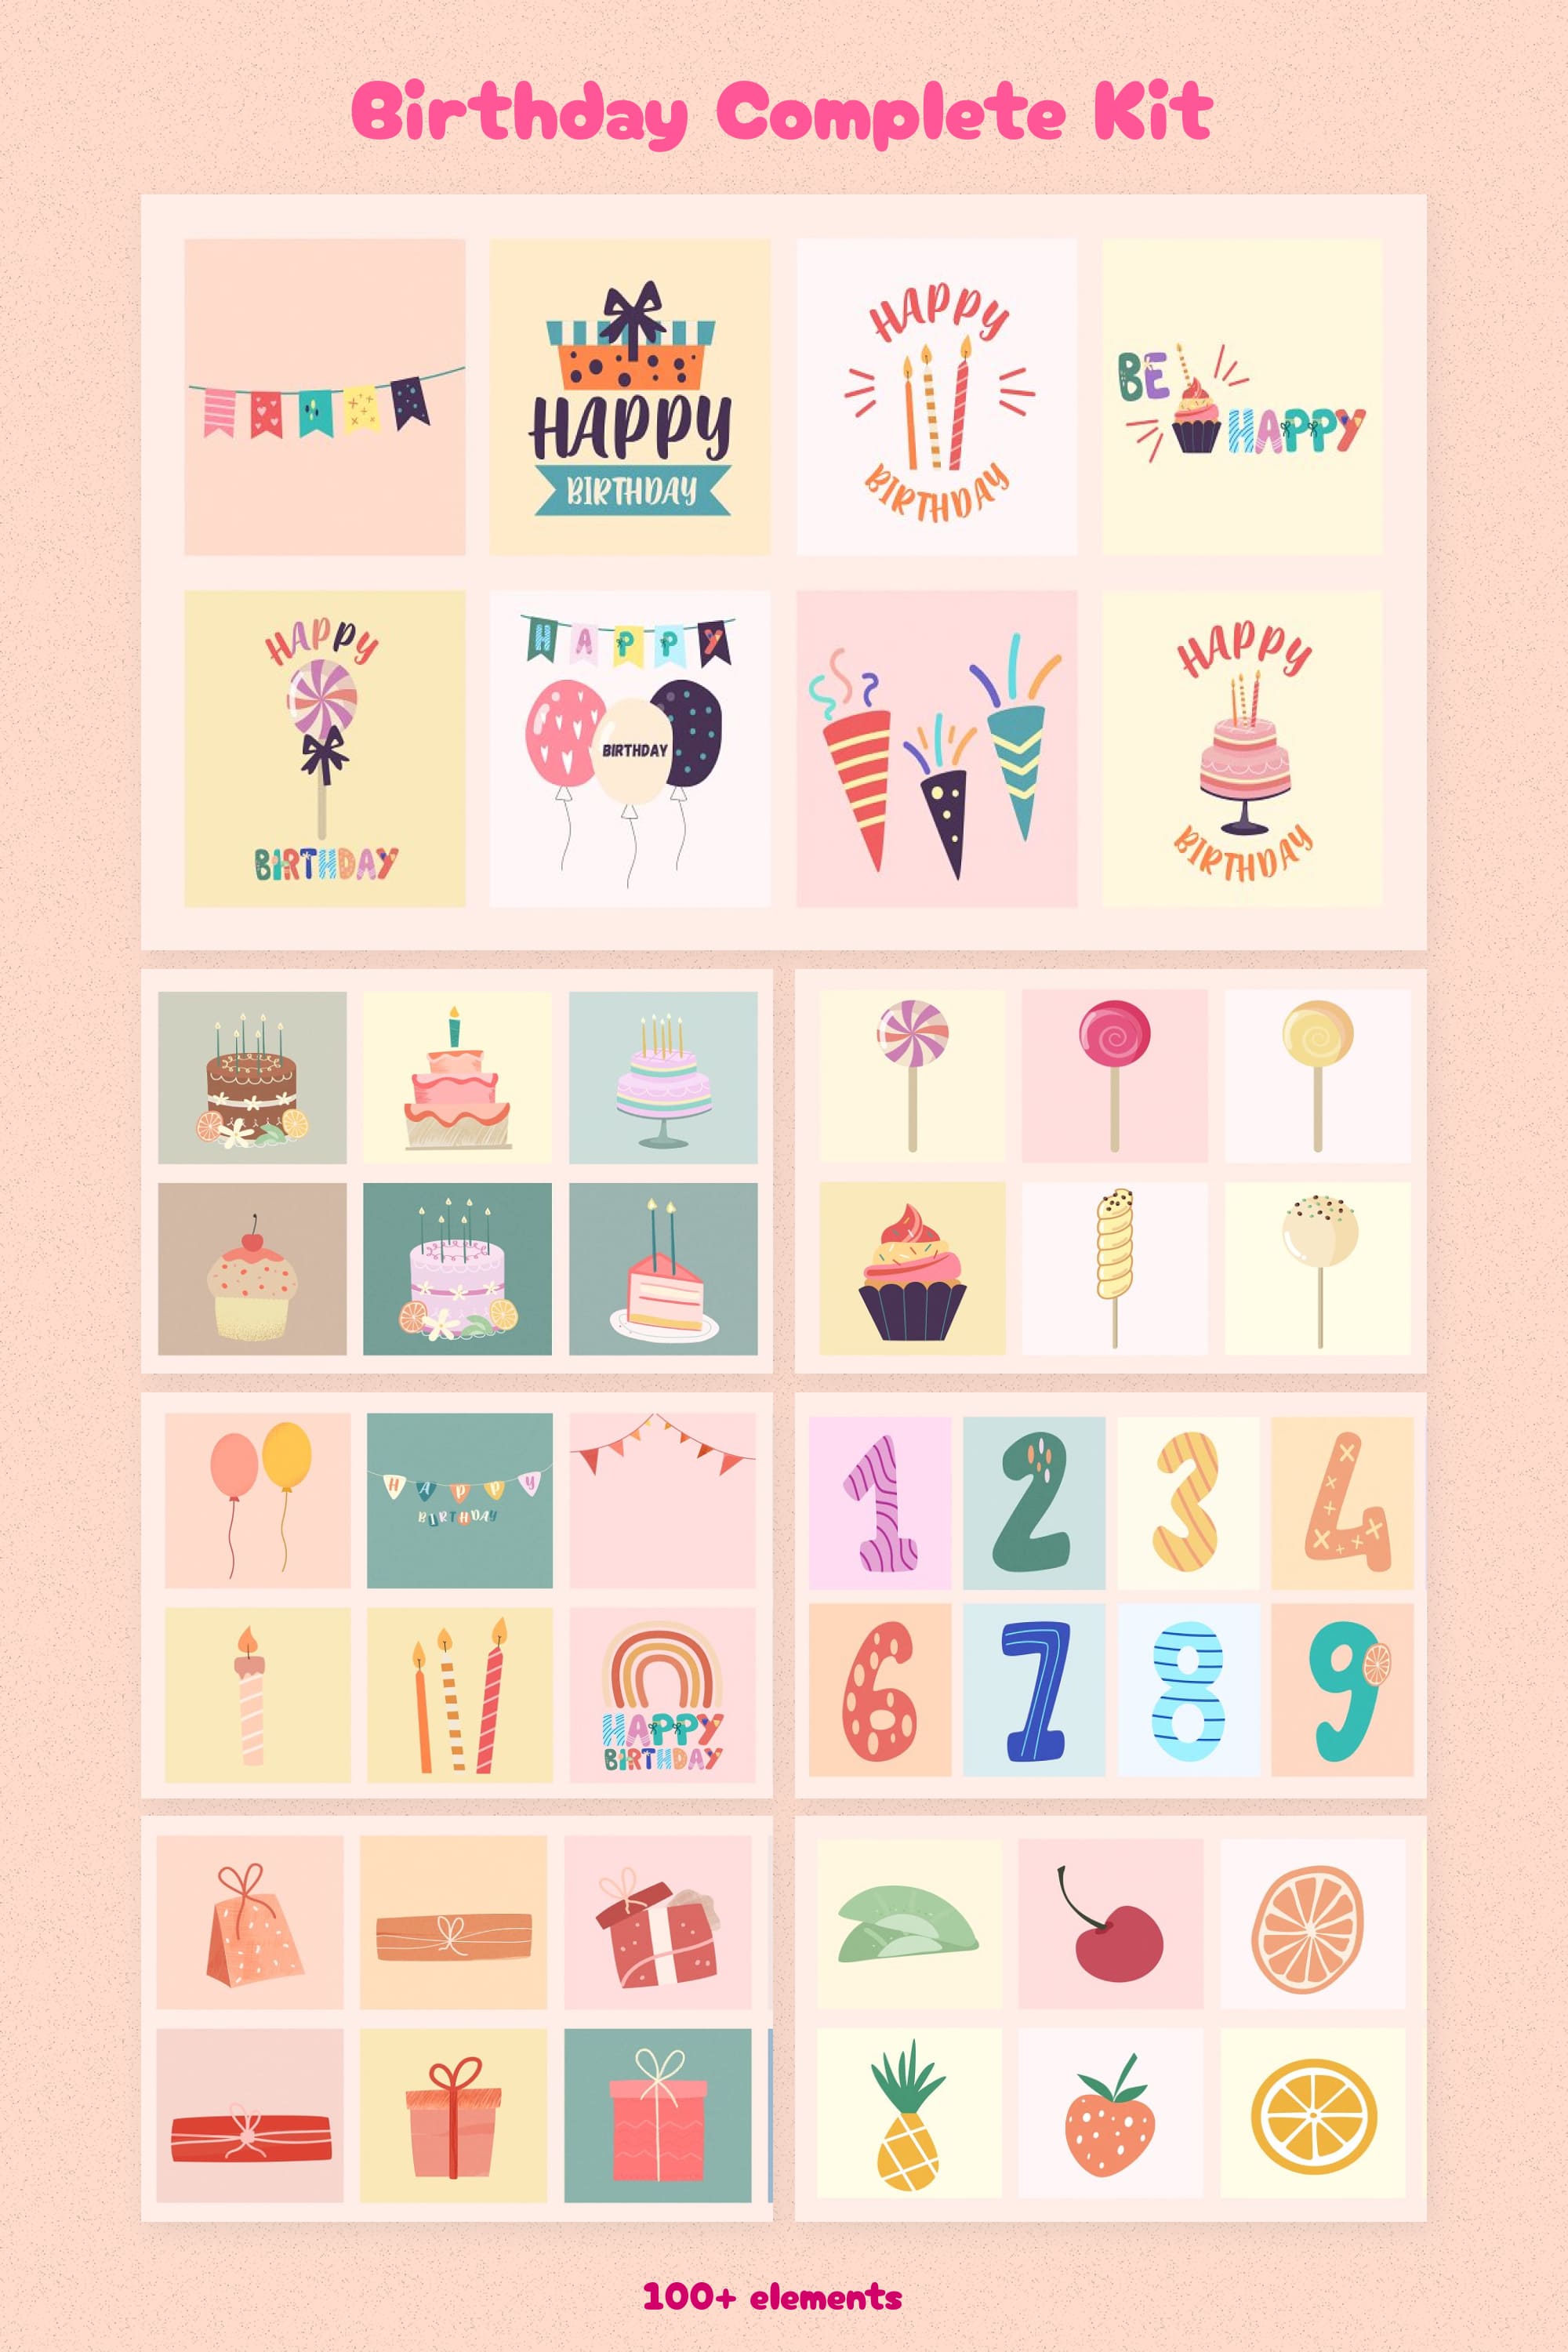 Birthday Complete Kit Pinterest.